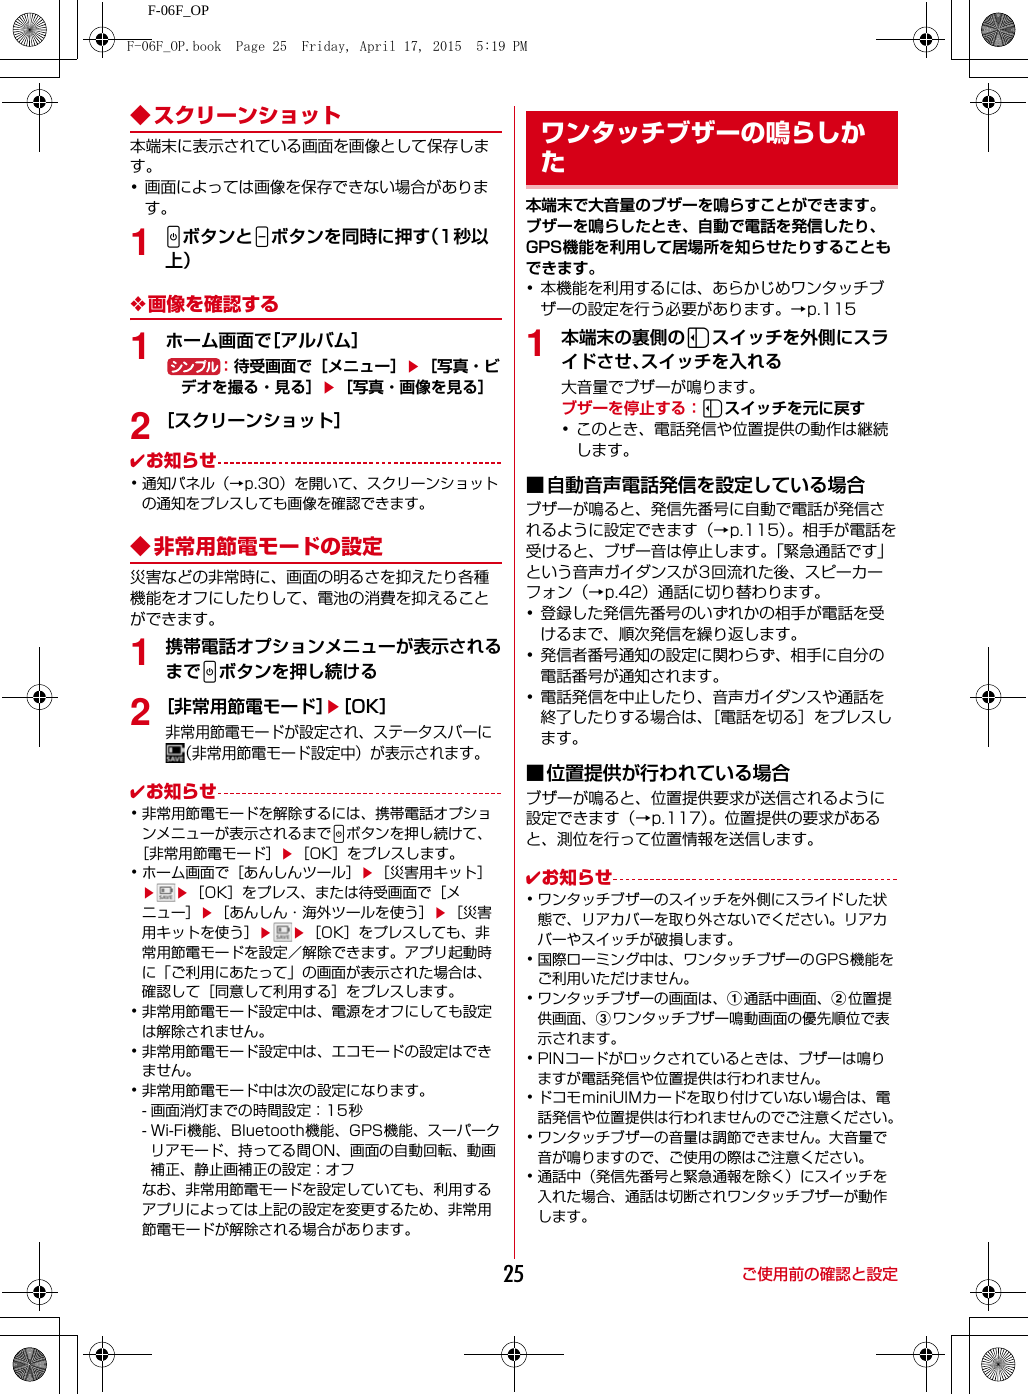 Fujitsu F06F2 Smart Phone User Manual 1